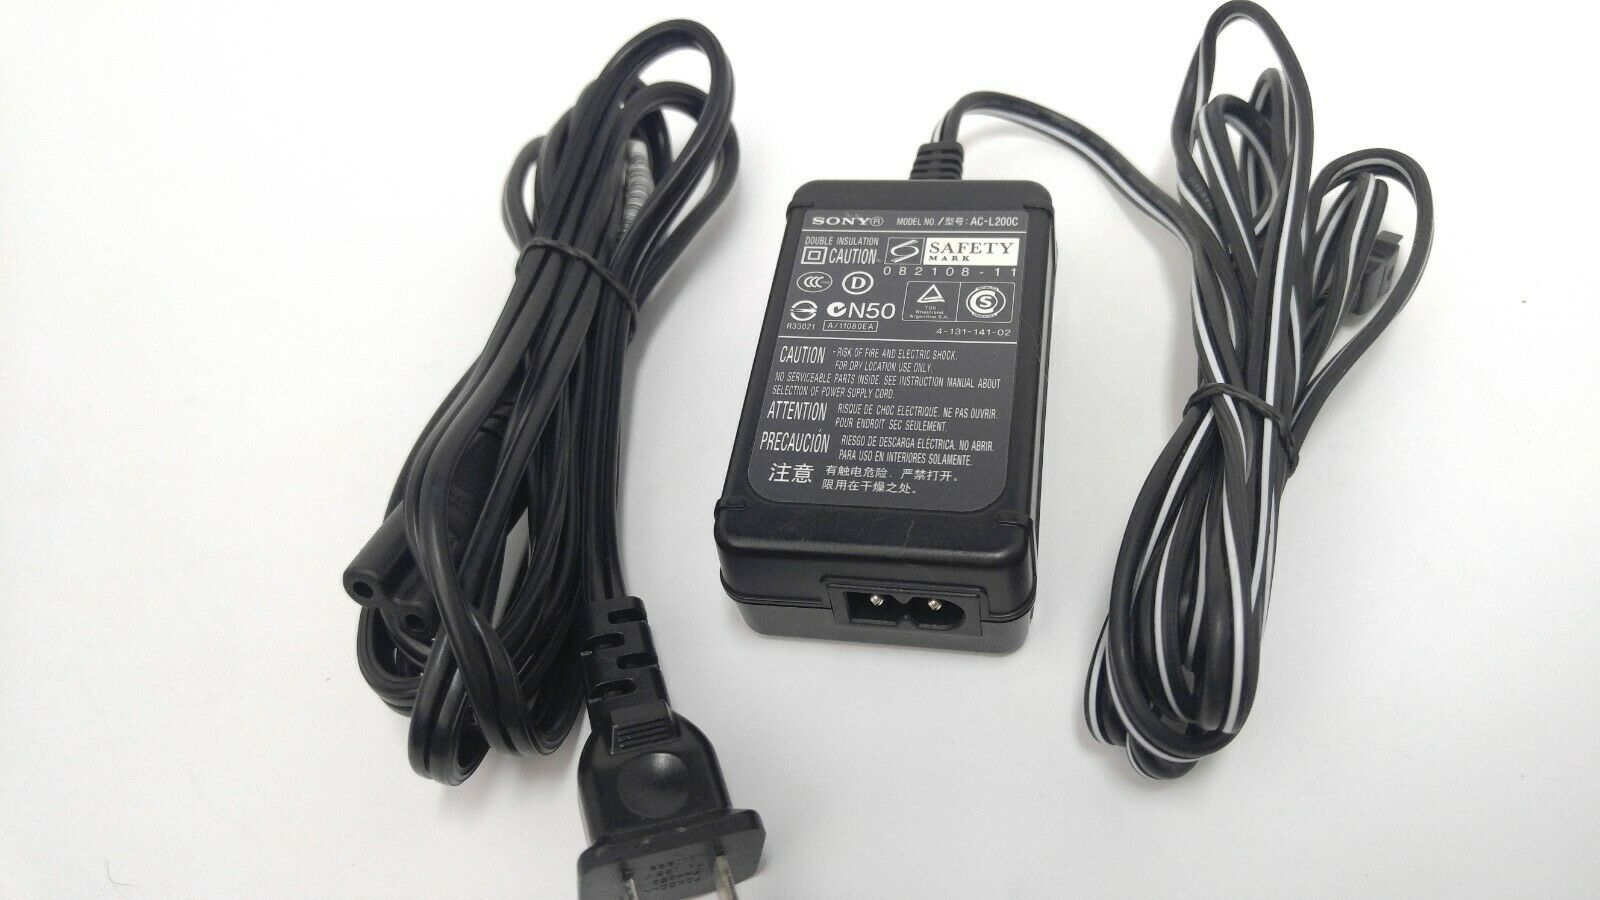 AC-L200C Sony AC Adapter for Handycam DSC-HX100V